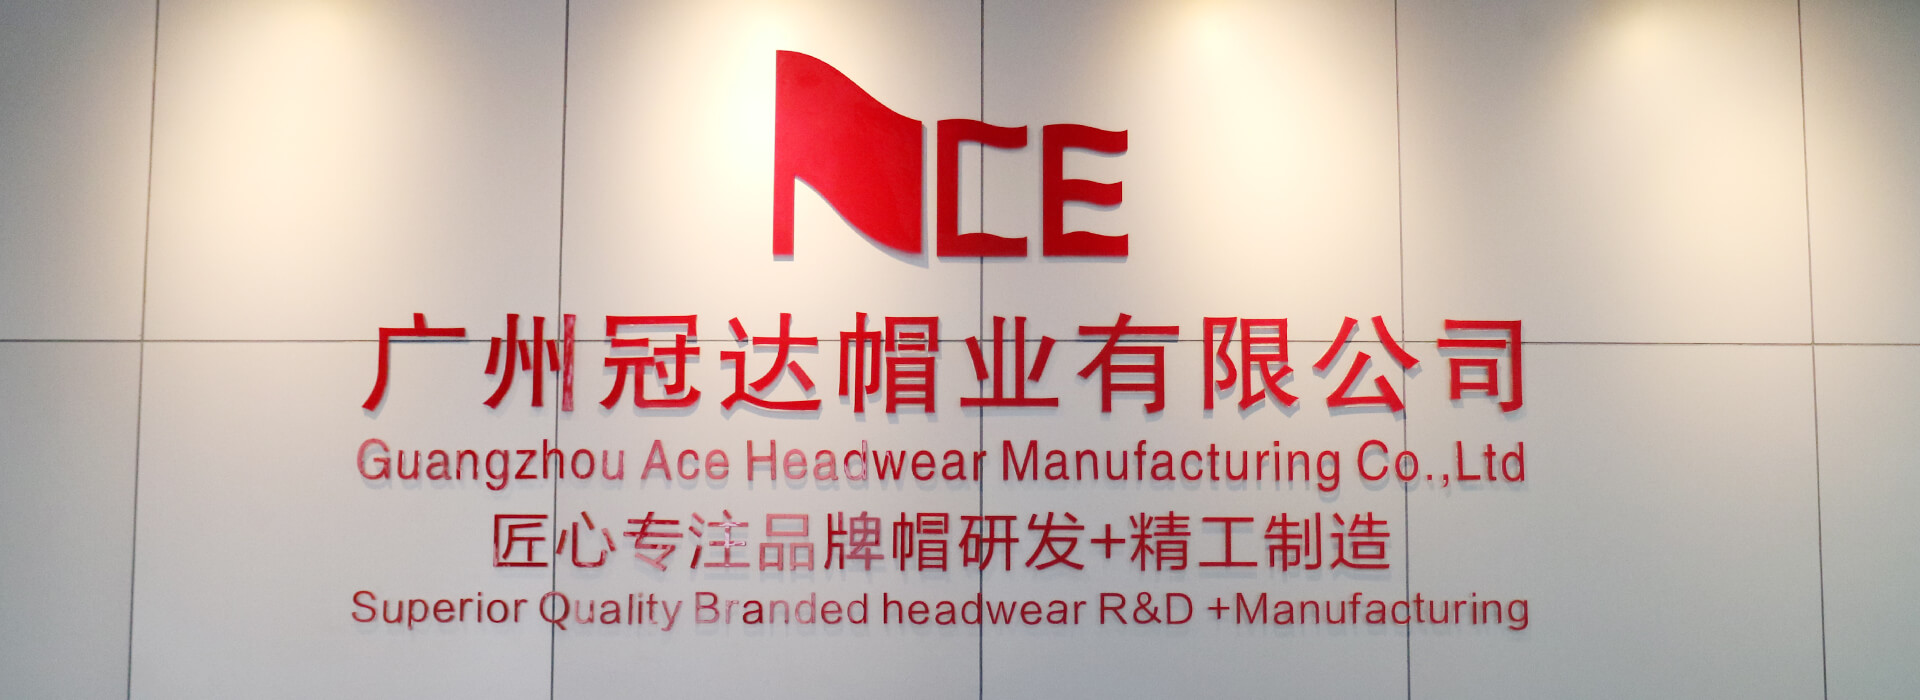 Guangzhou Ace Headwear Manufacturing Co.Ltd